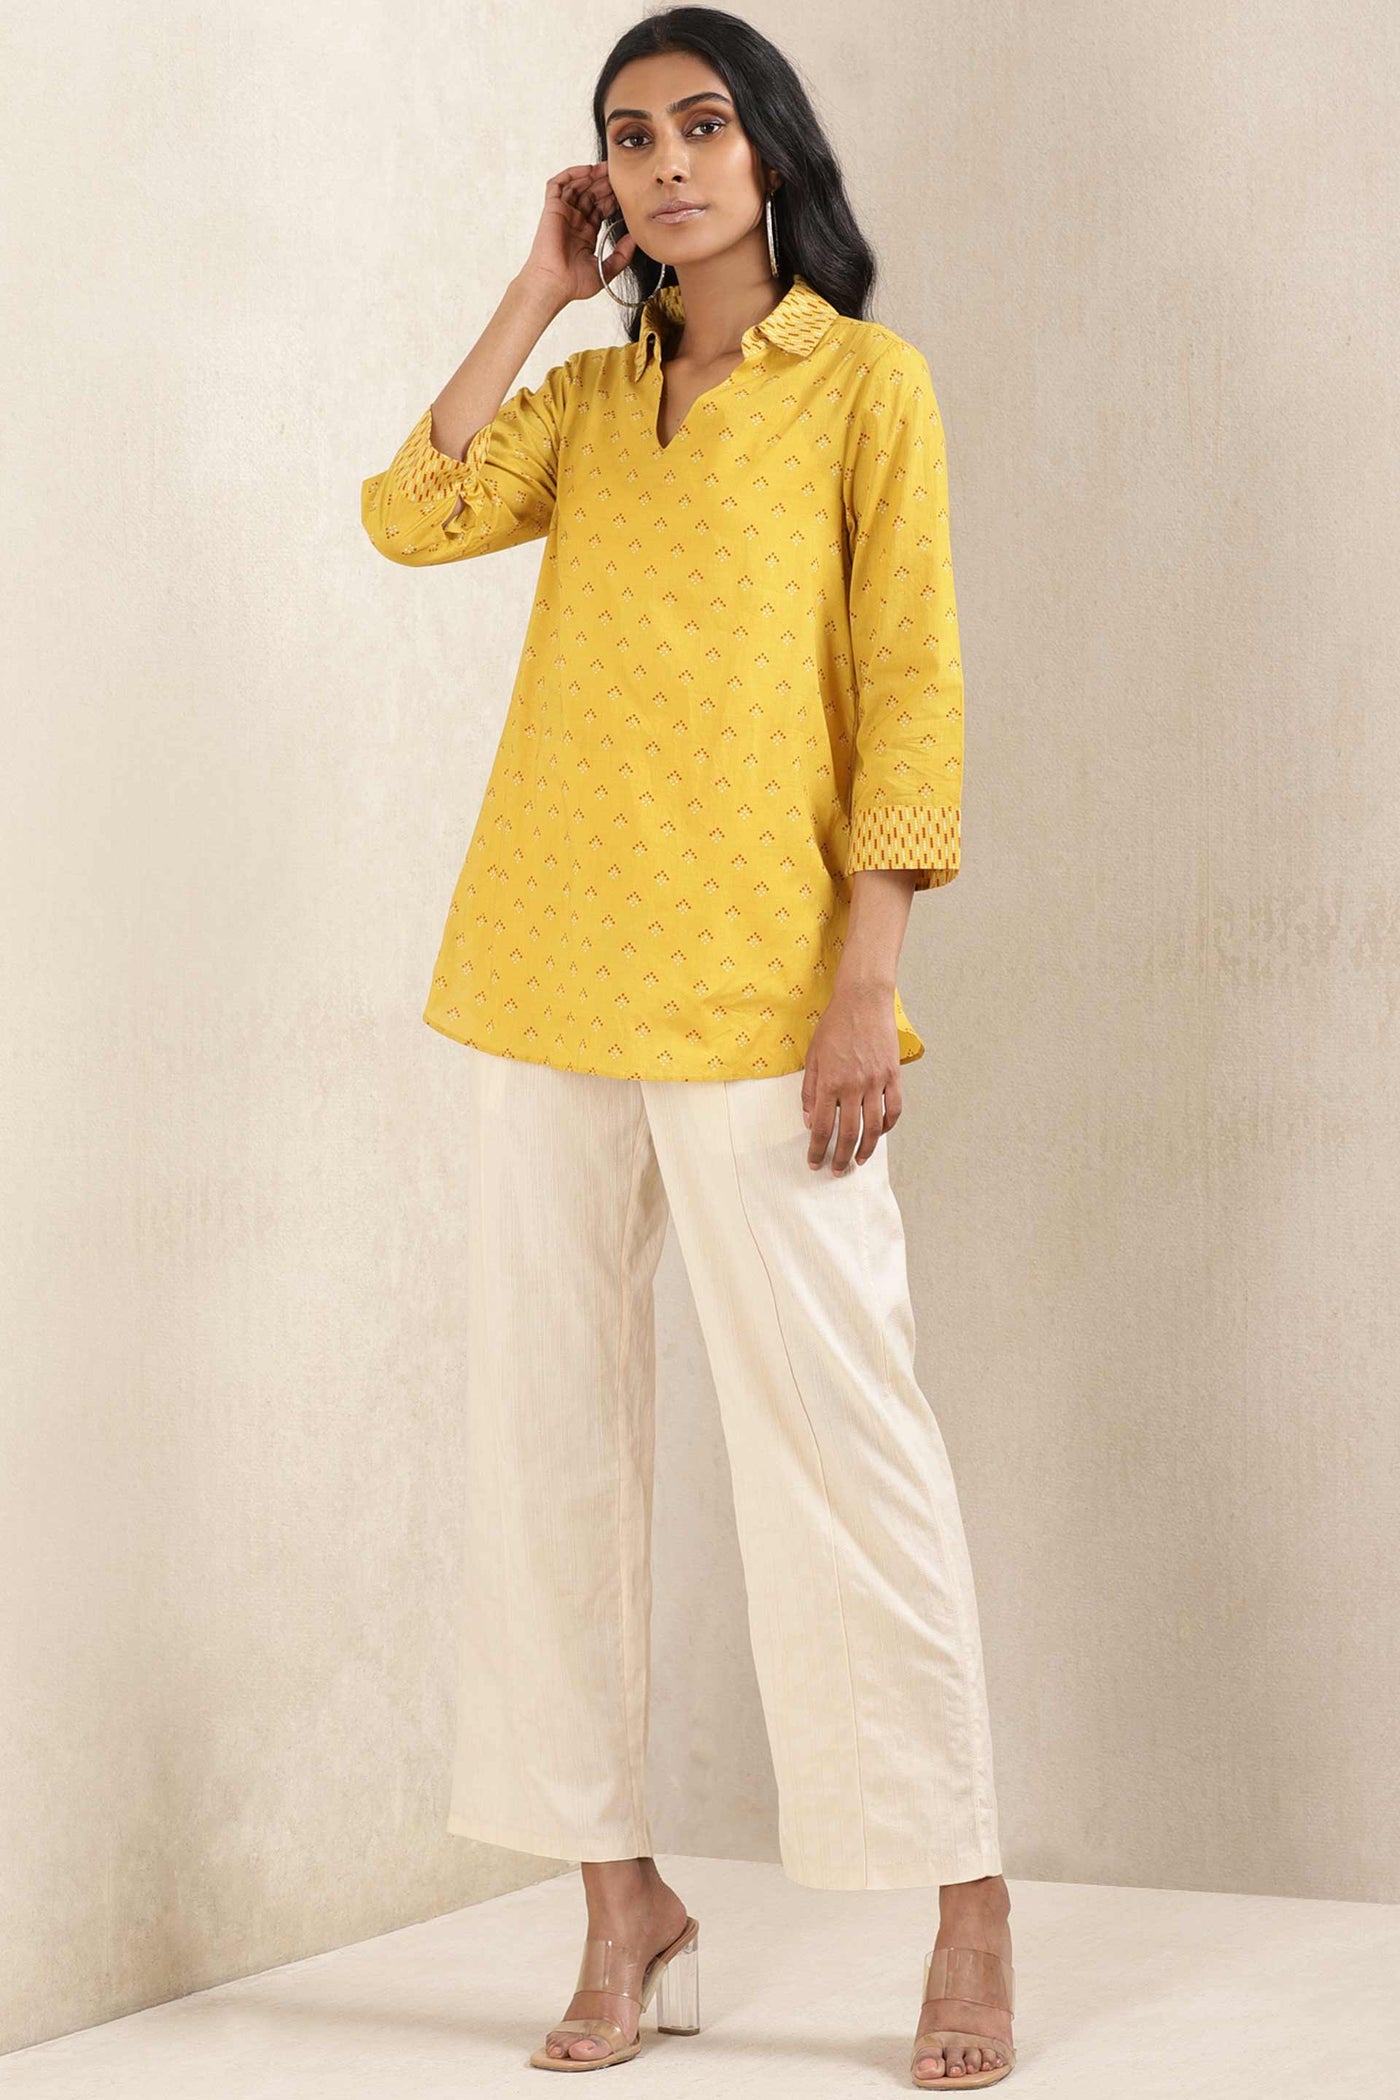 Buy Yellow Rayon Casual Wear Lucknowi Kurti Online From Wholesale Salwar.